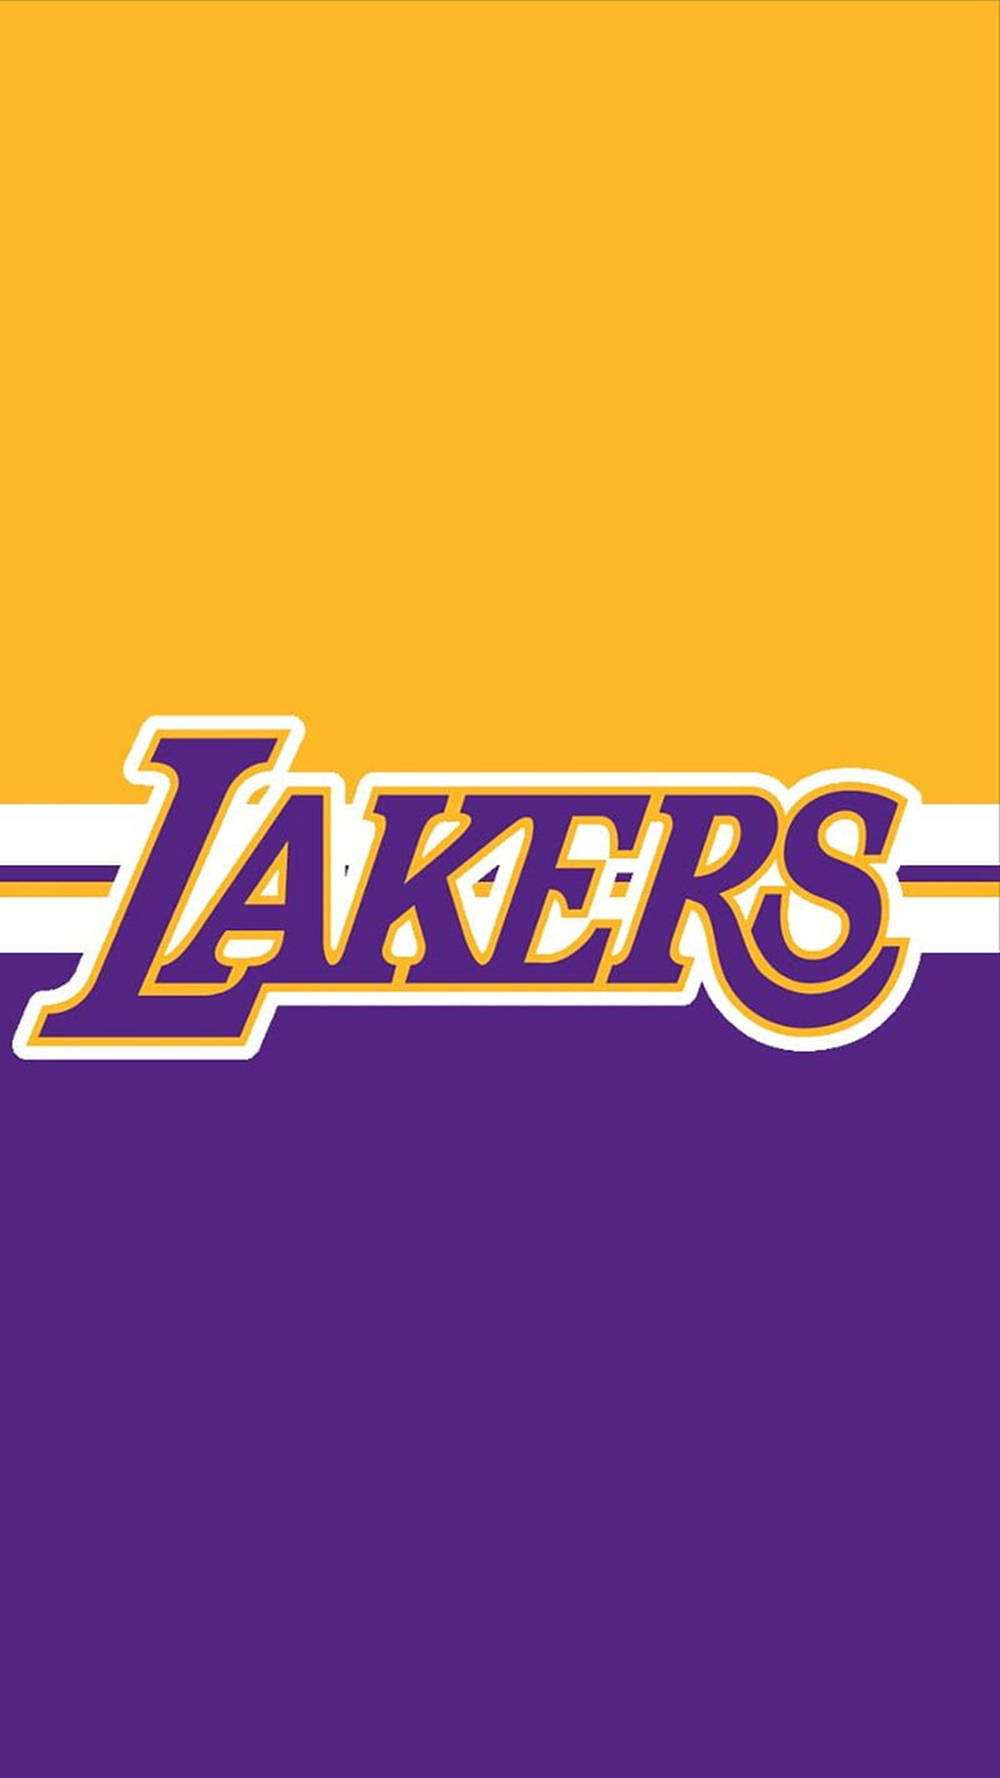 Minimalist Lakers Logo Wallpaper